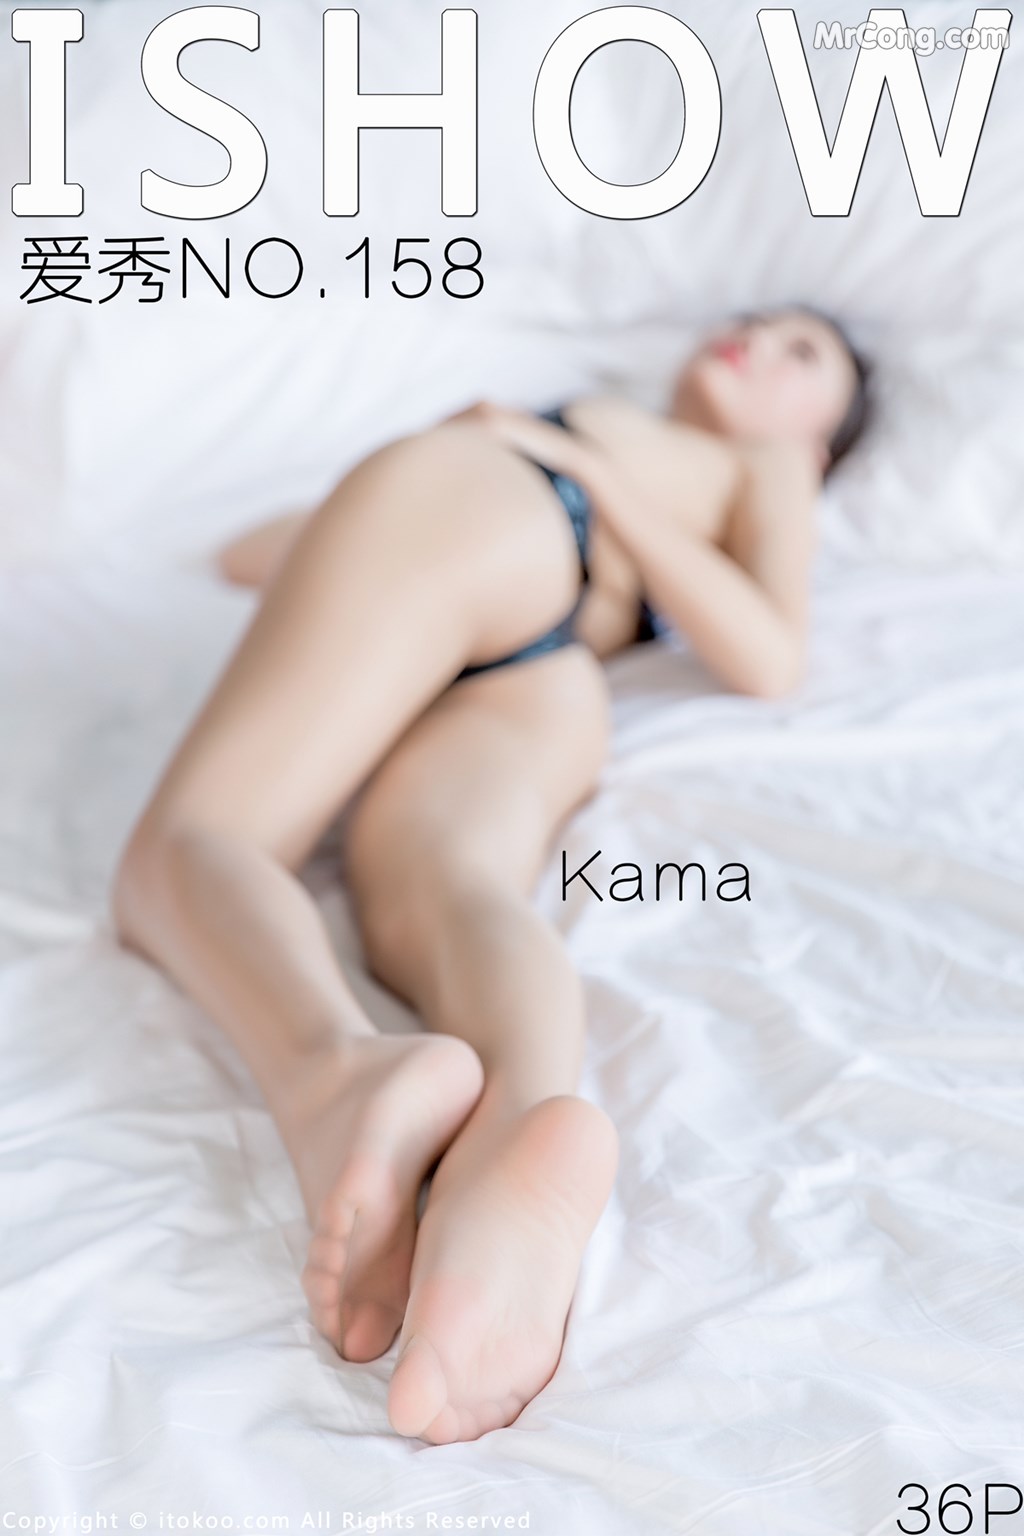 ISHOW No.158: Kama Model (37 photos) photo 1-0